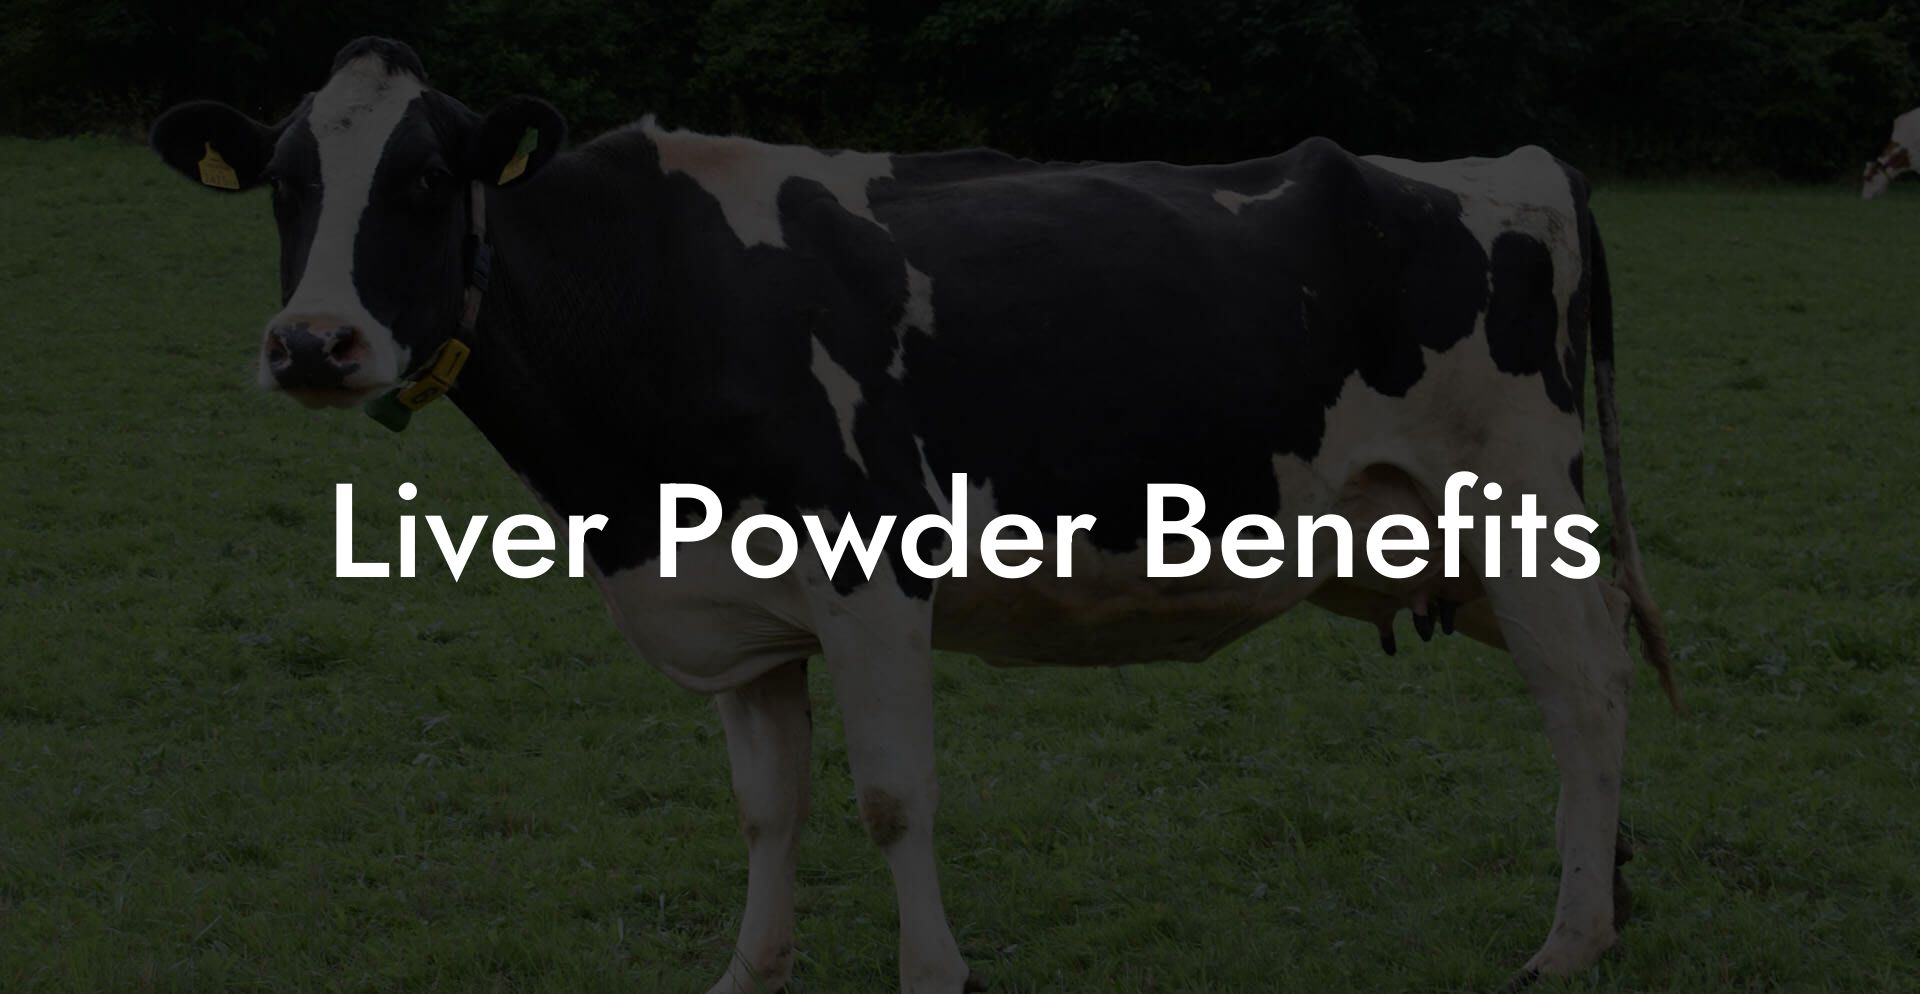 Liver Powder Benefits